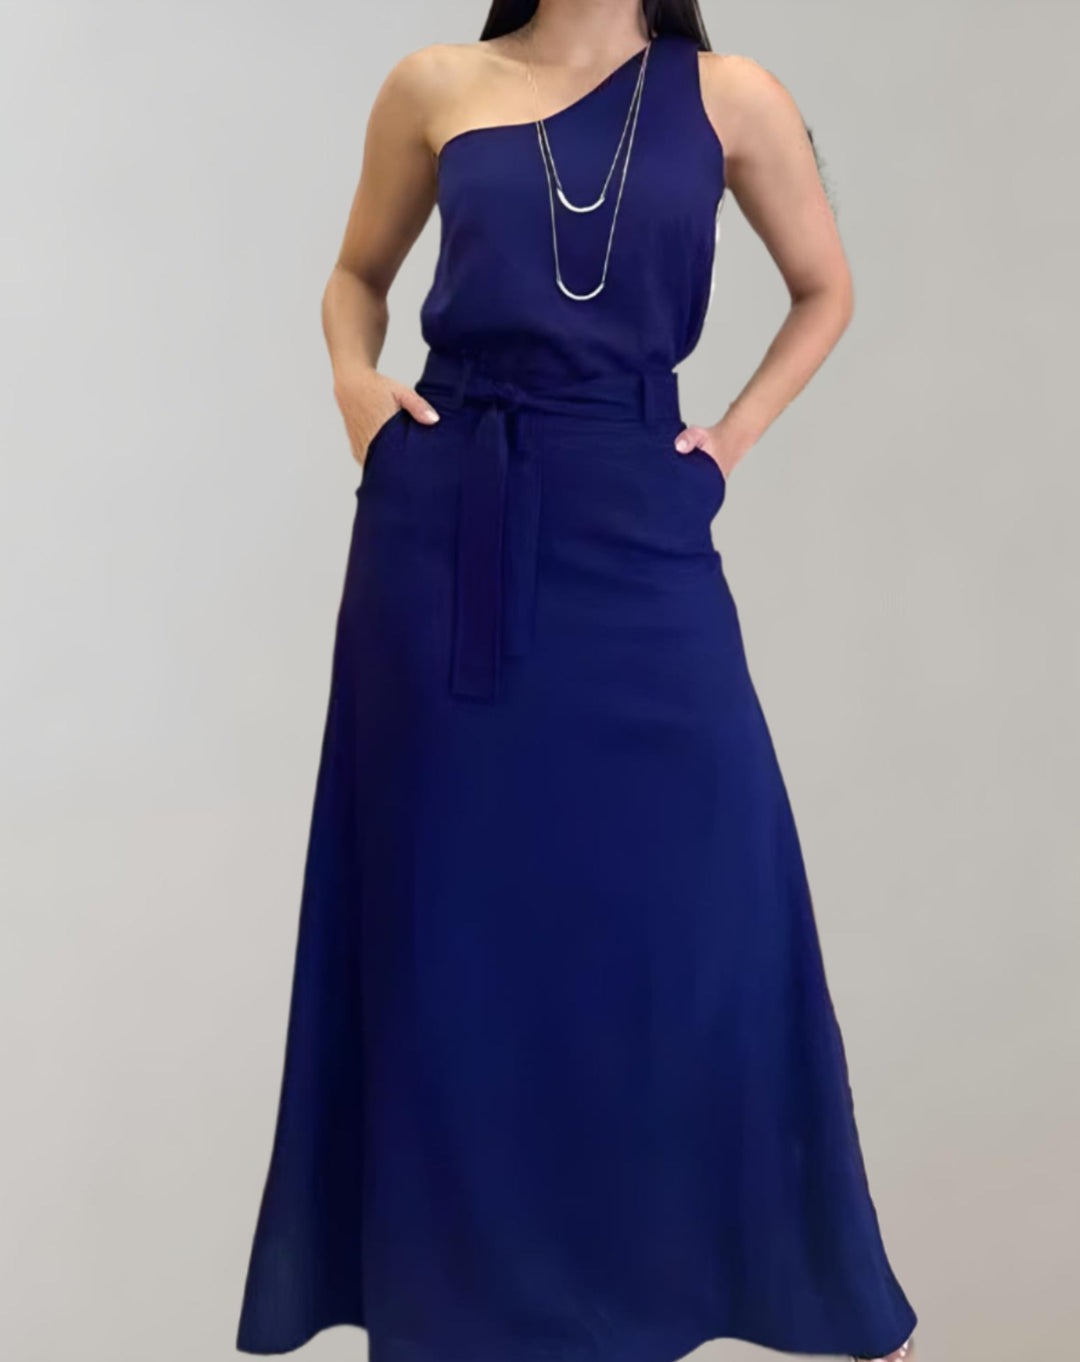 Tinley - Stijlvolle asymmetrische maxi-jurk met één schouder en riem